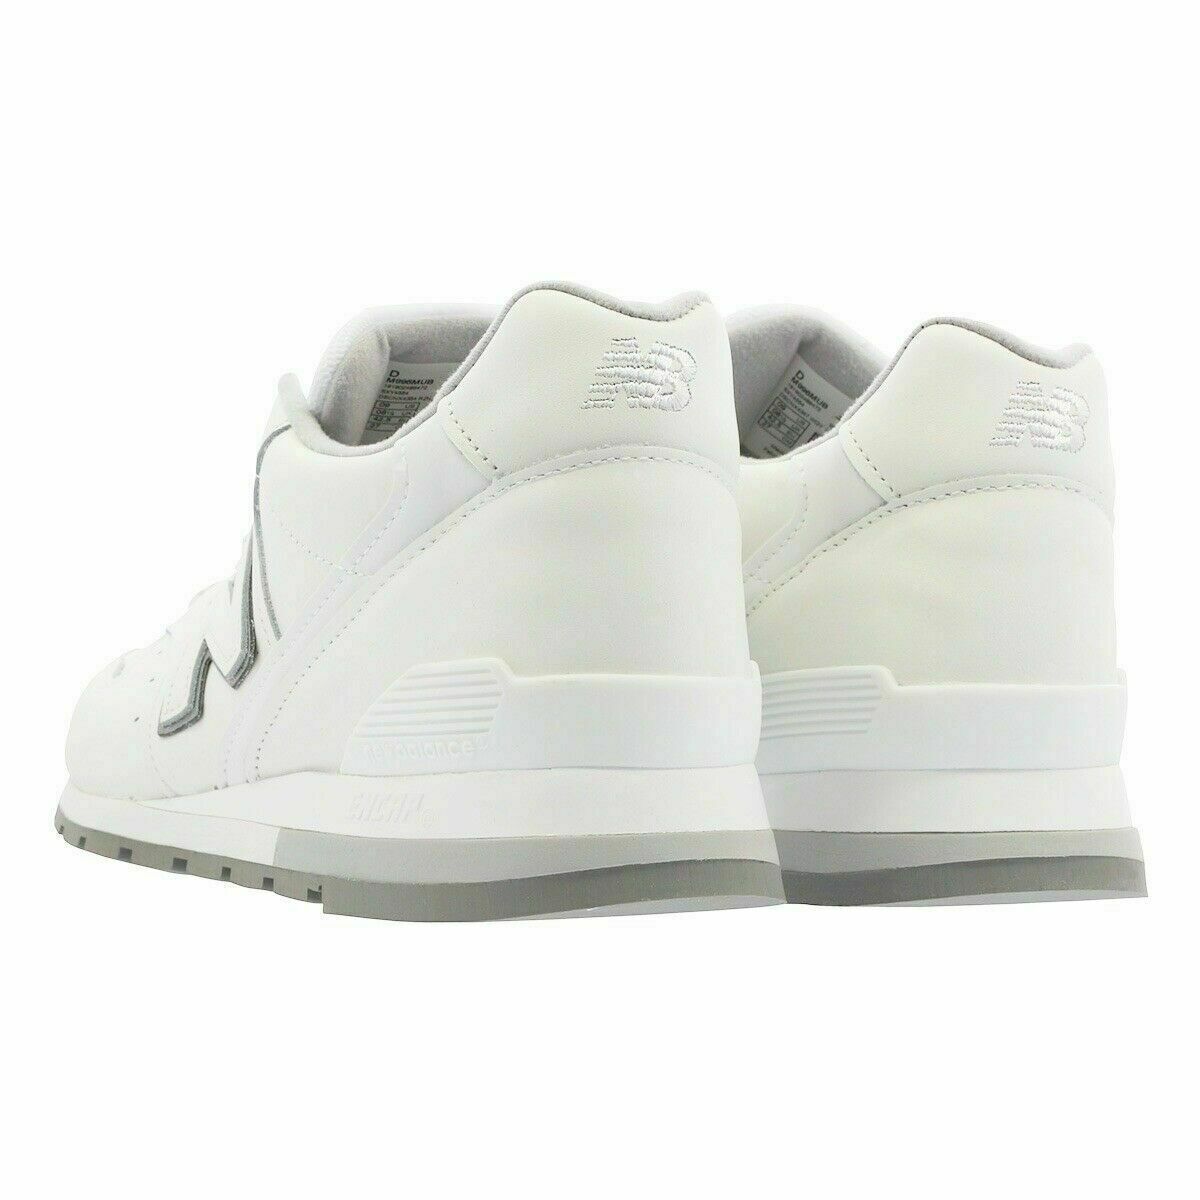 New Balance 996 Made in USA 30th Anniversary Men's White Shoes M996MUB | eBay